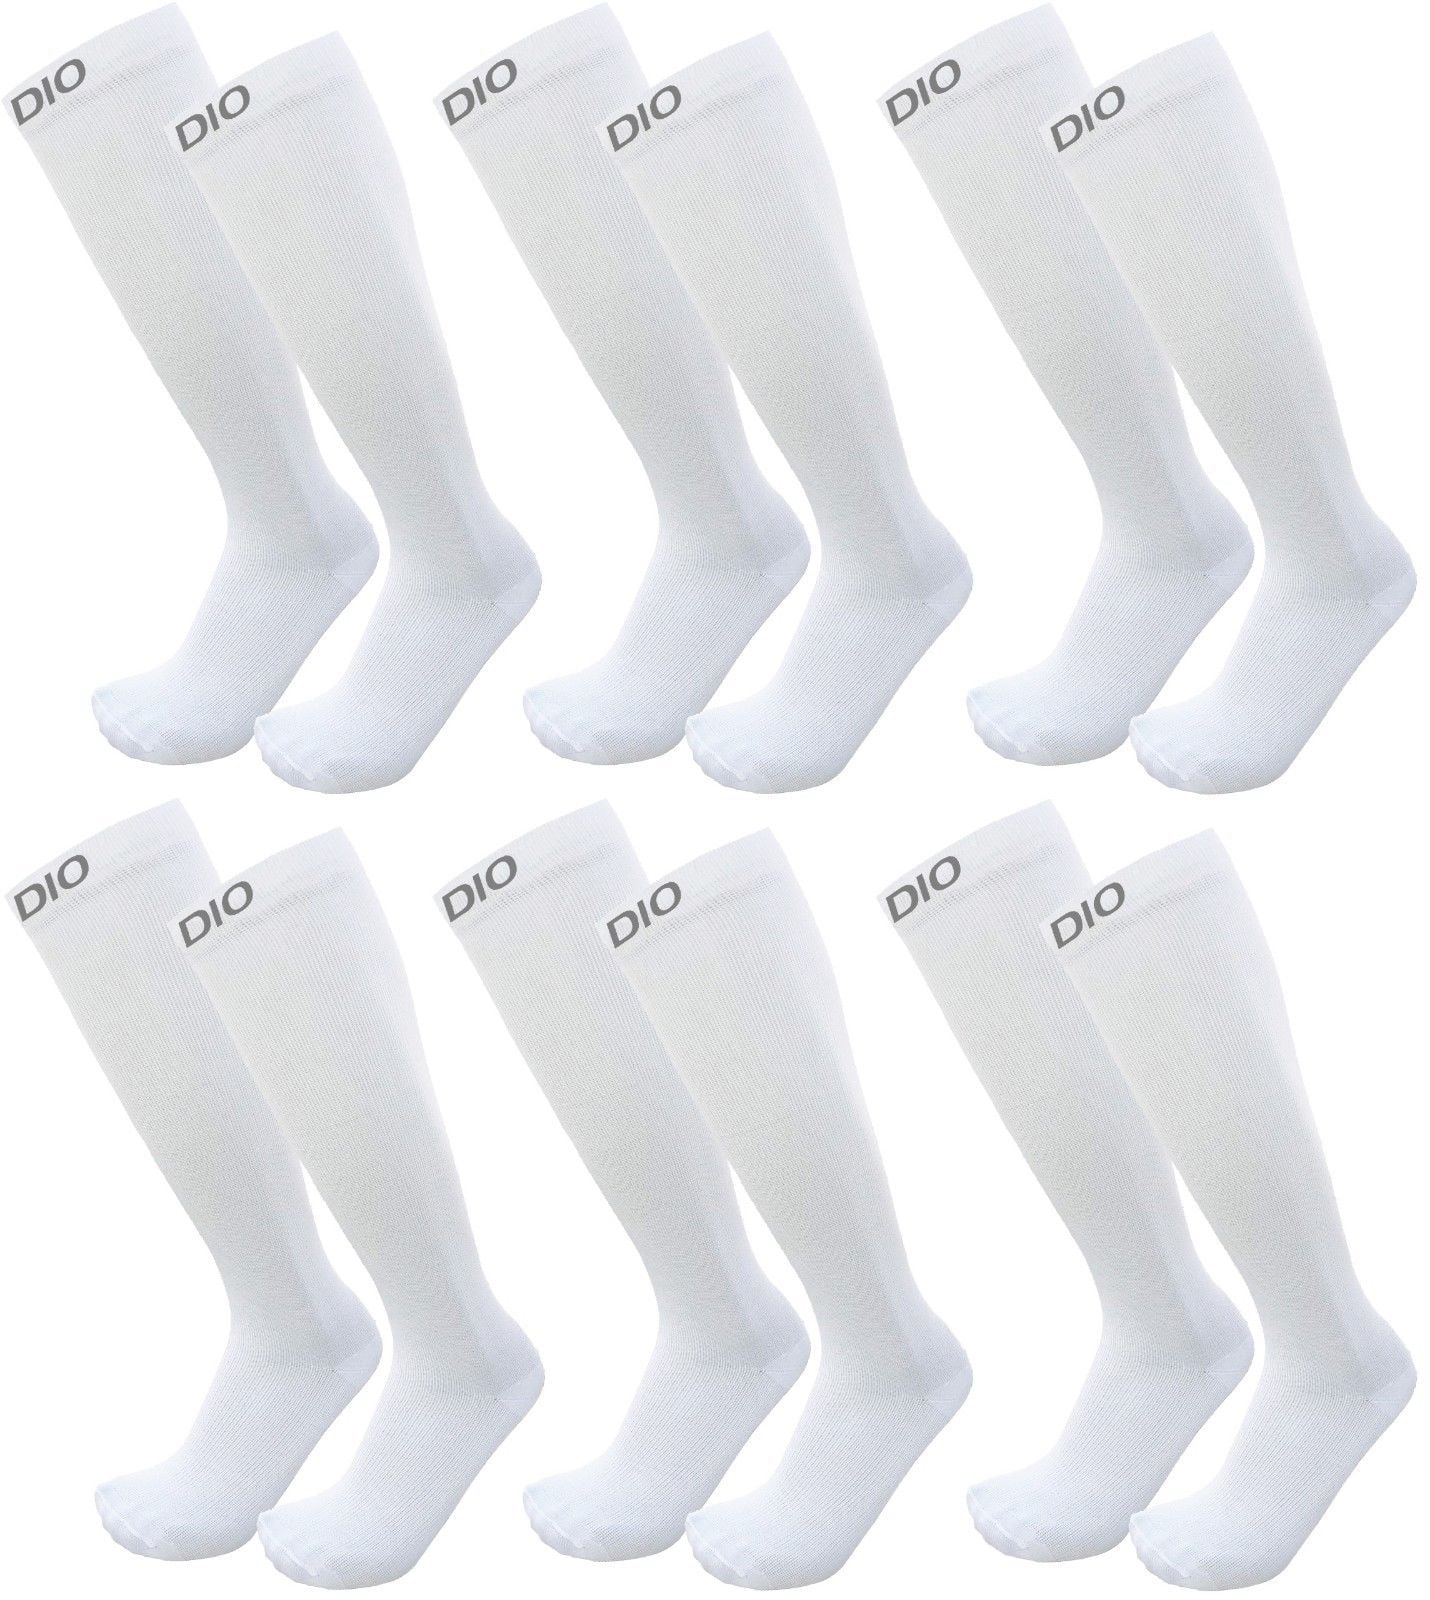 Fitdio Compression Socks Size Chart